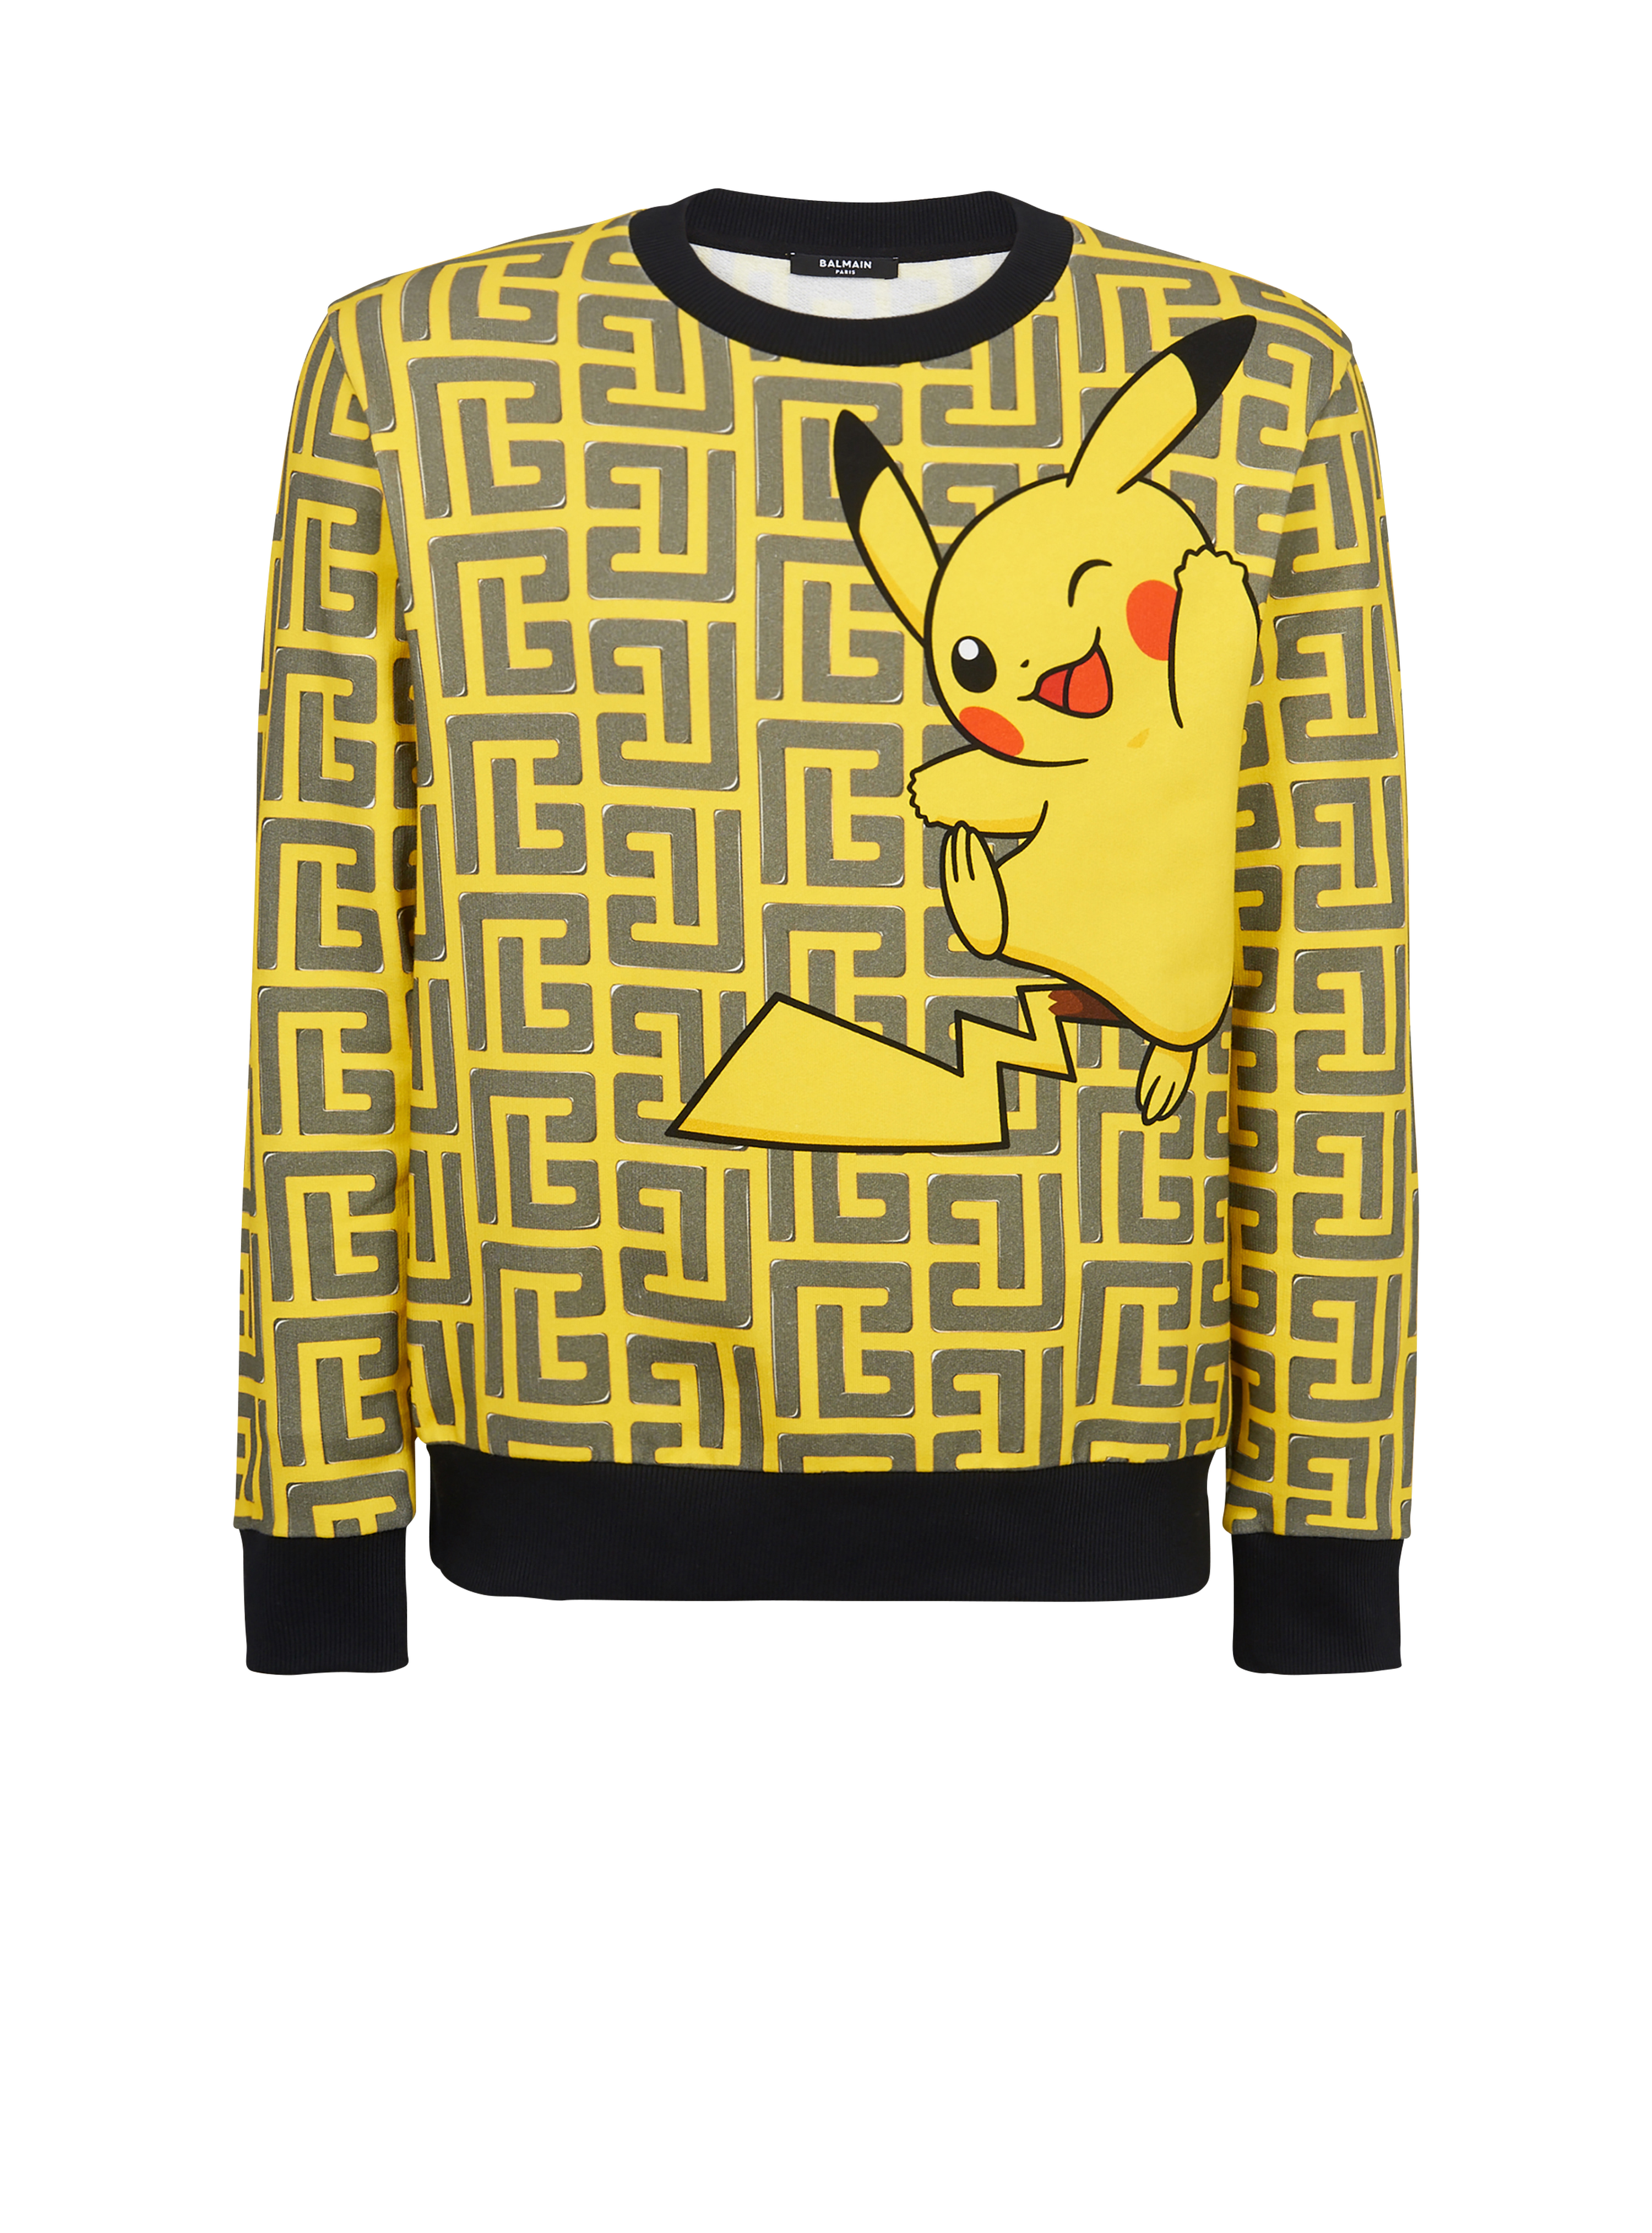 Unisex - Sweatshirt with Pokémon print, yellow